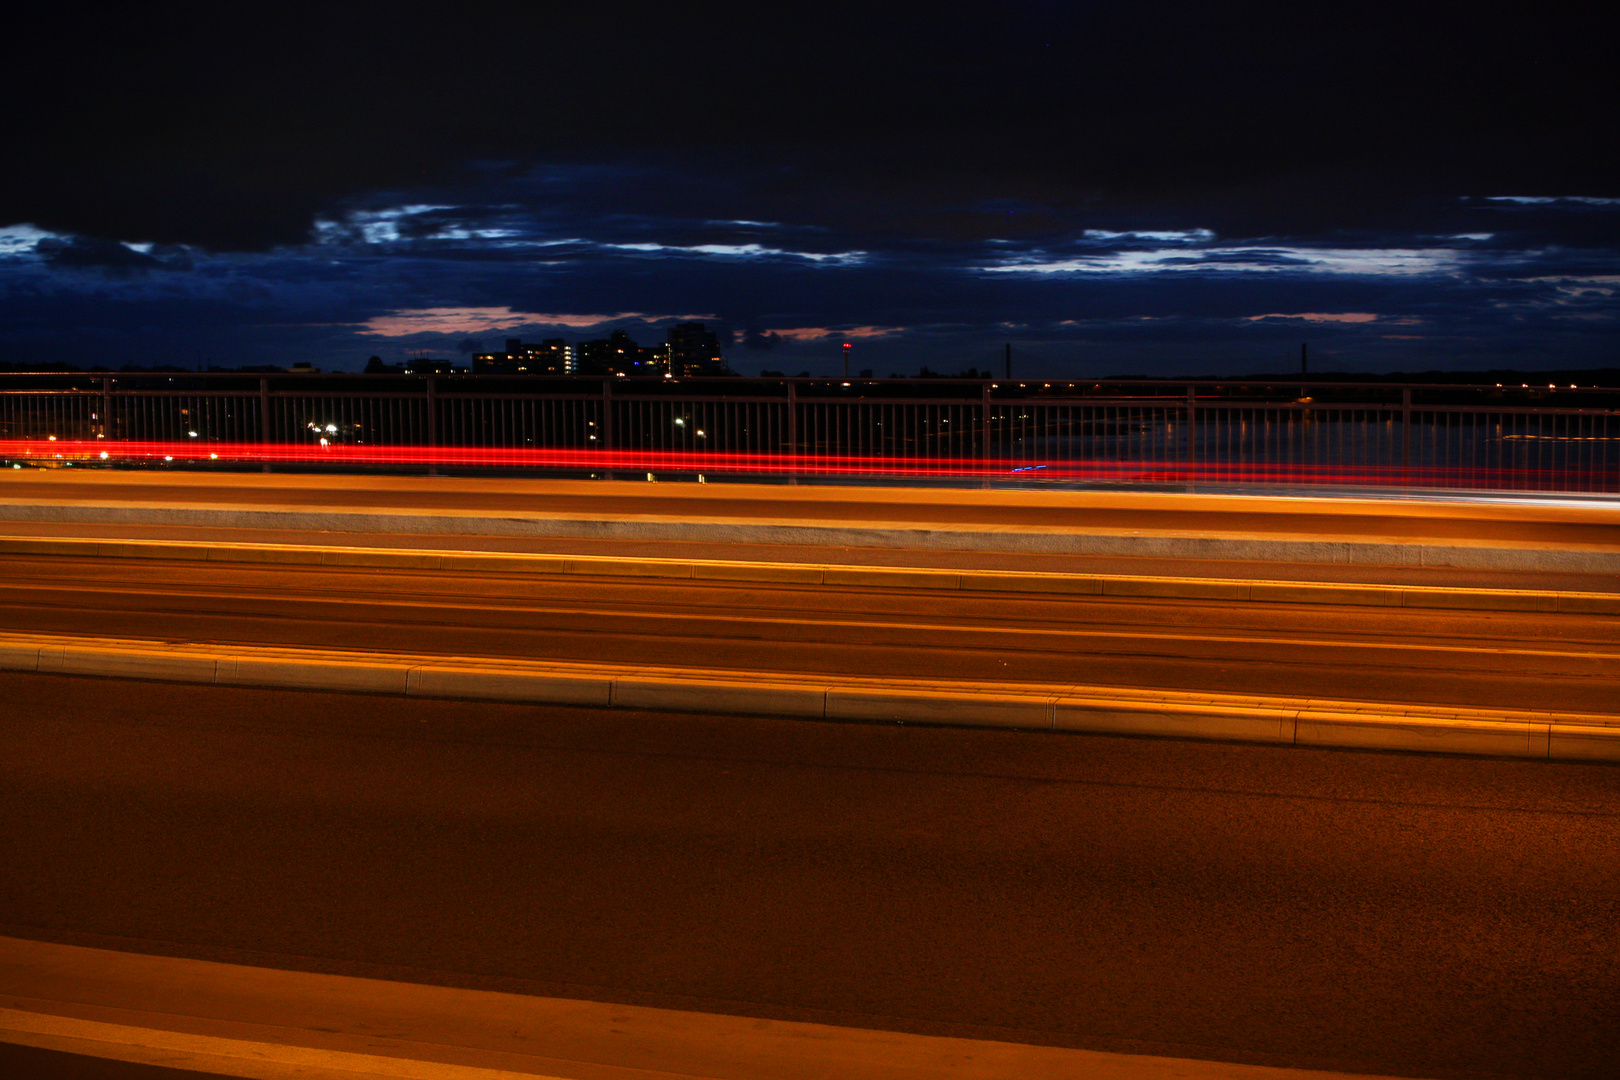 Brücke nachts